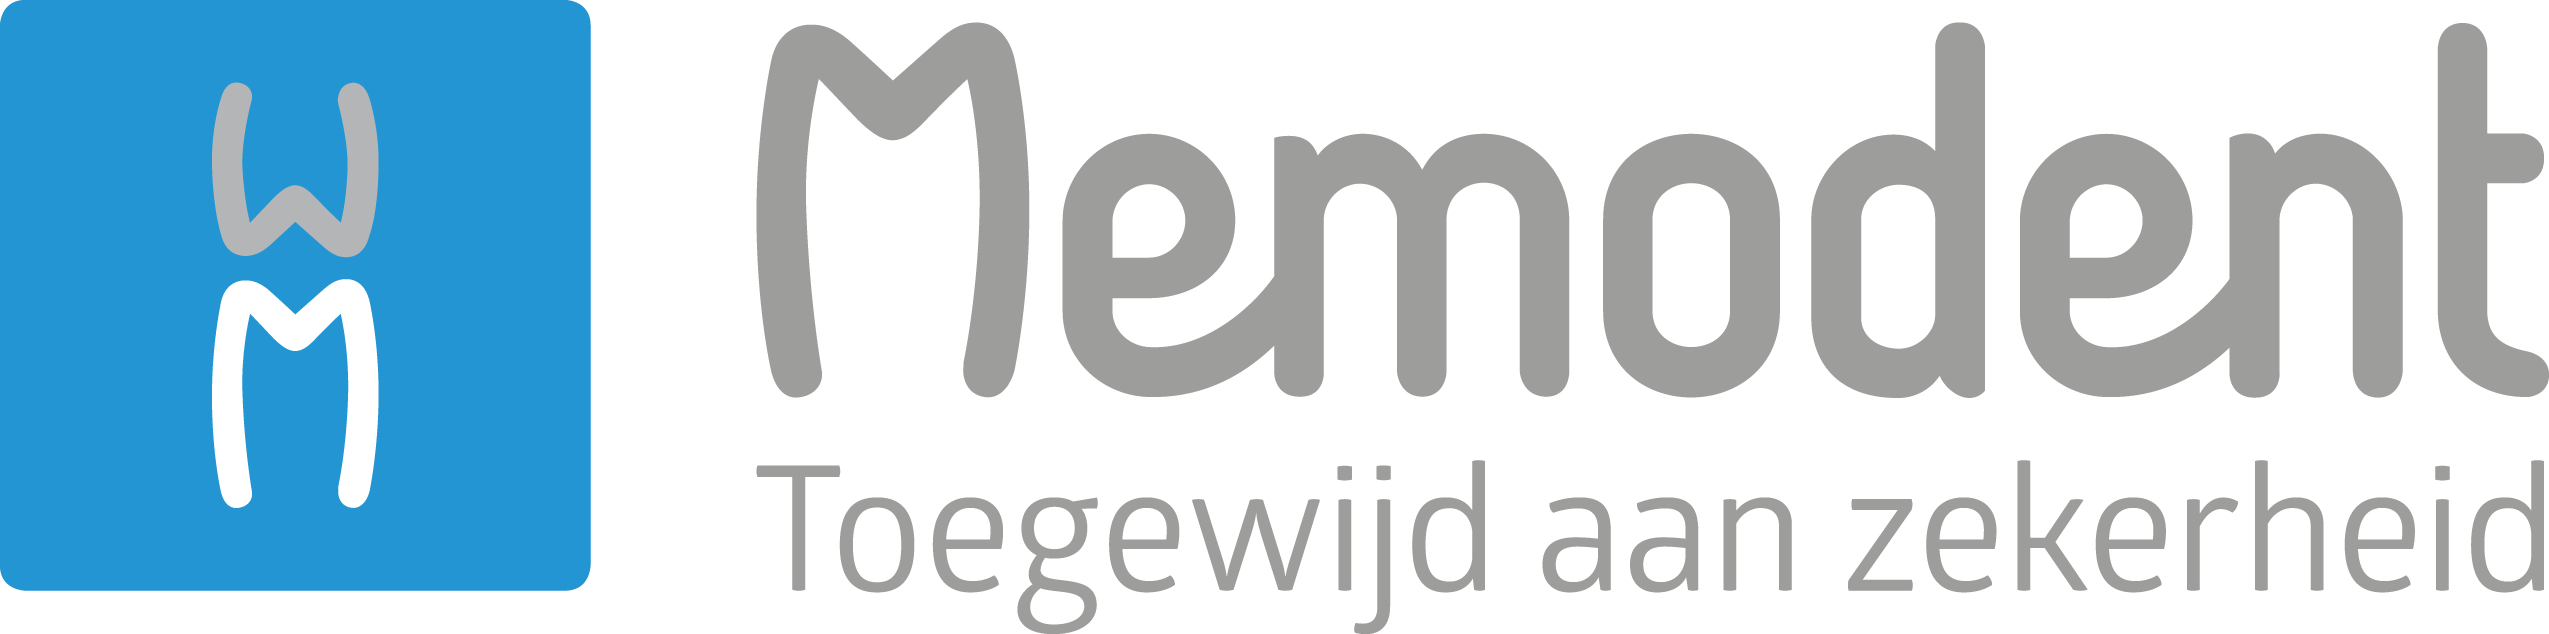 logo Memodent